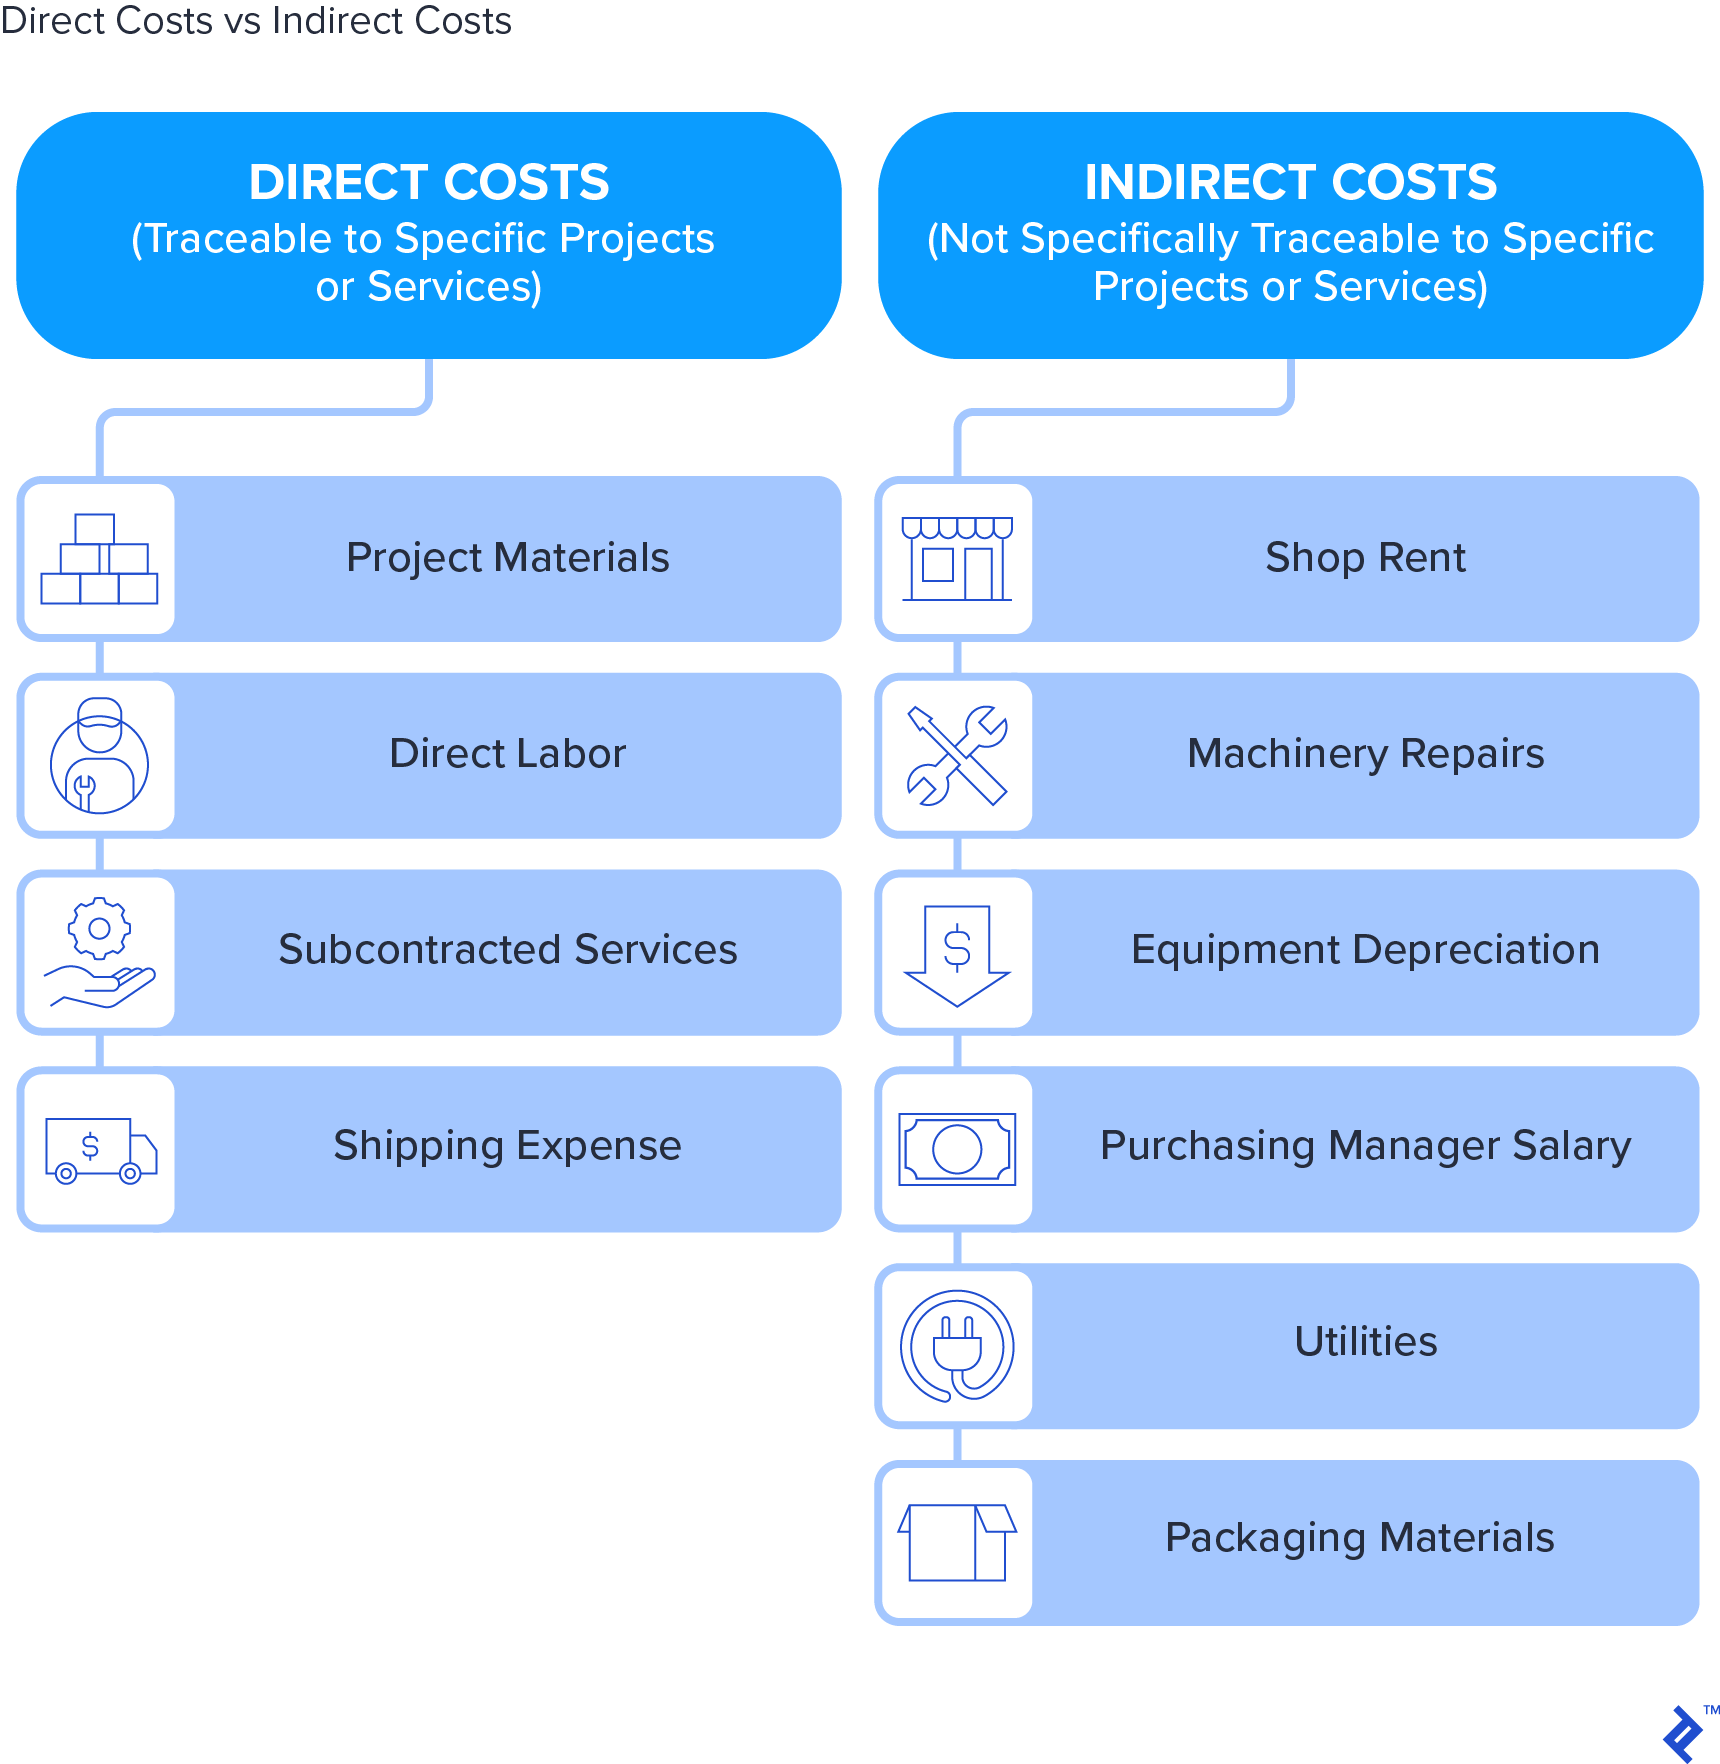 Direct costs versus indirect costs